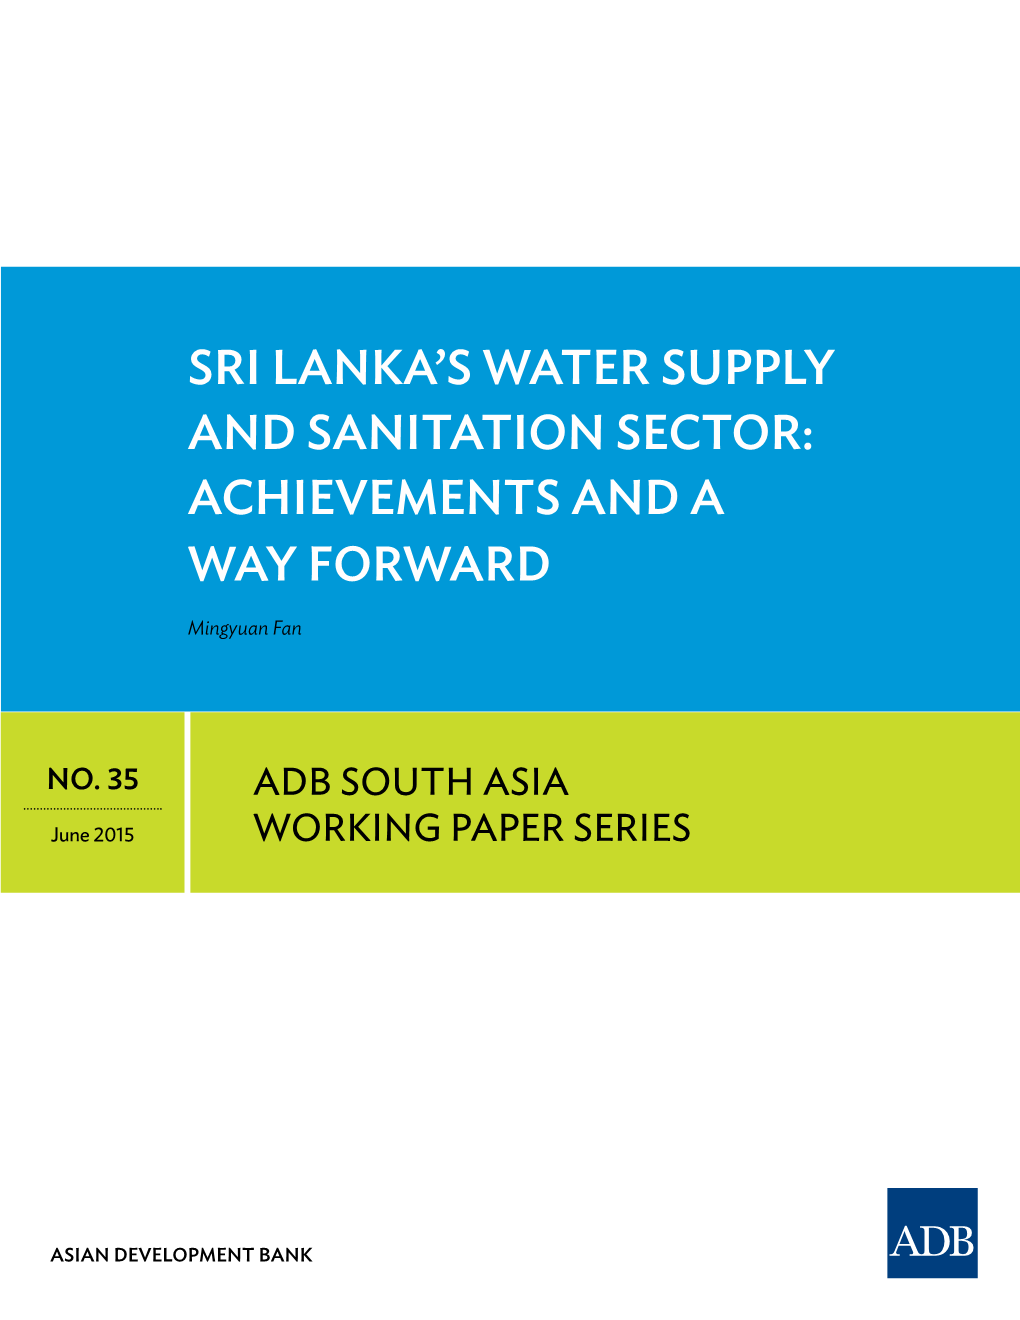 Sri Lanka's Water Supply and Sanitation Sector: Achievements